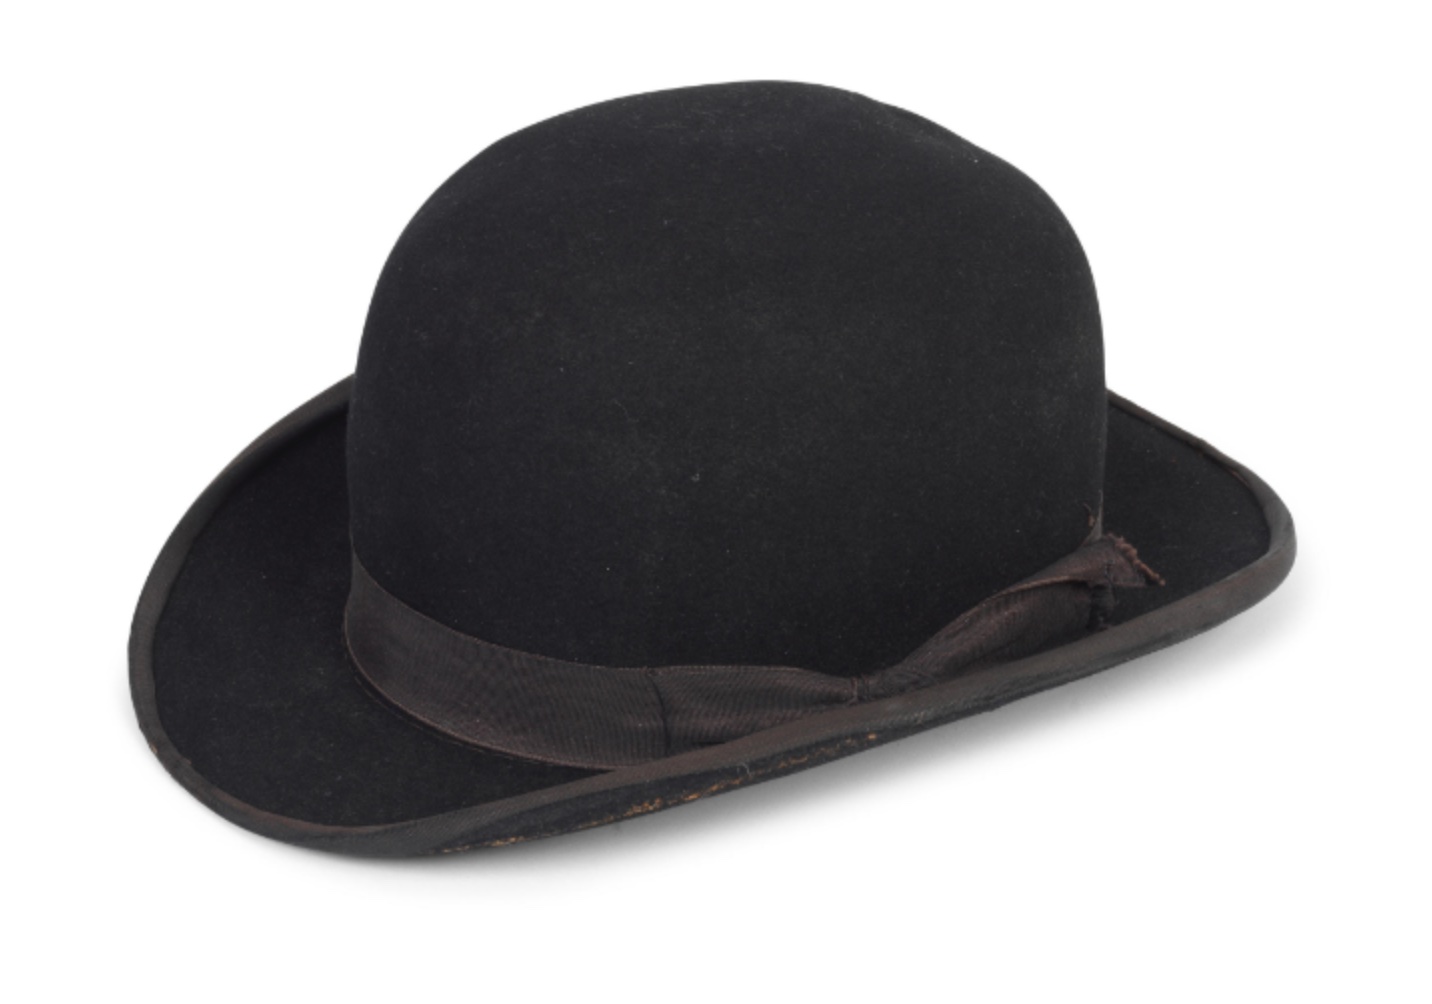 A bowler hat that belonged to Stan Laurel